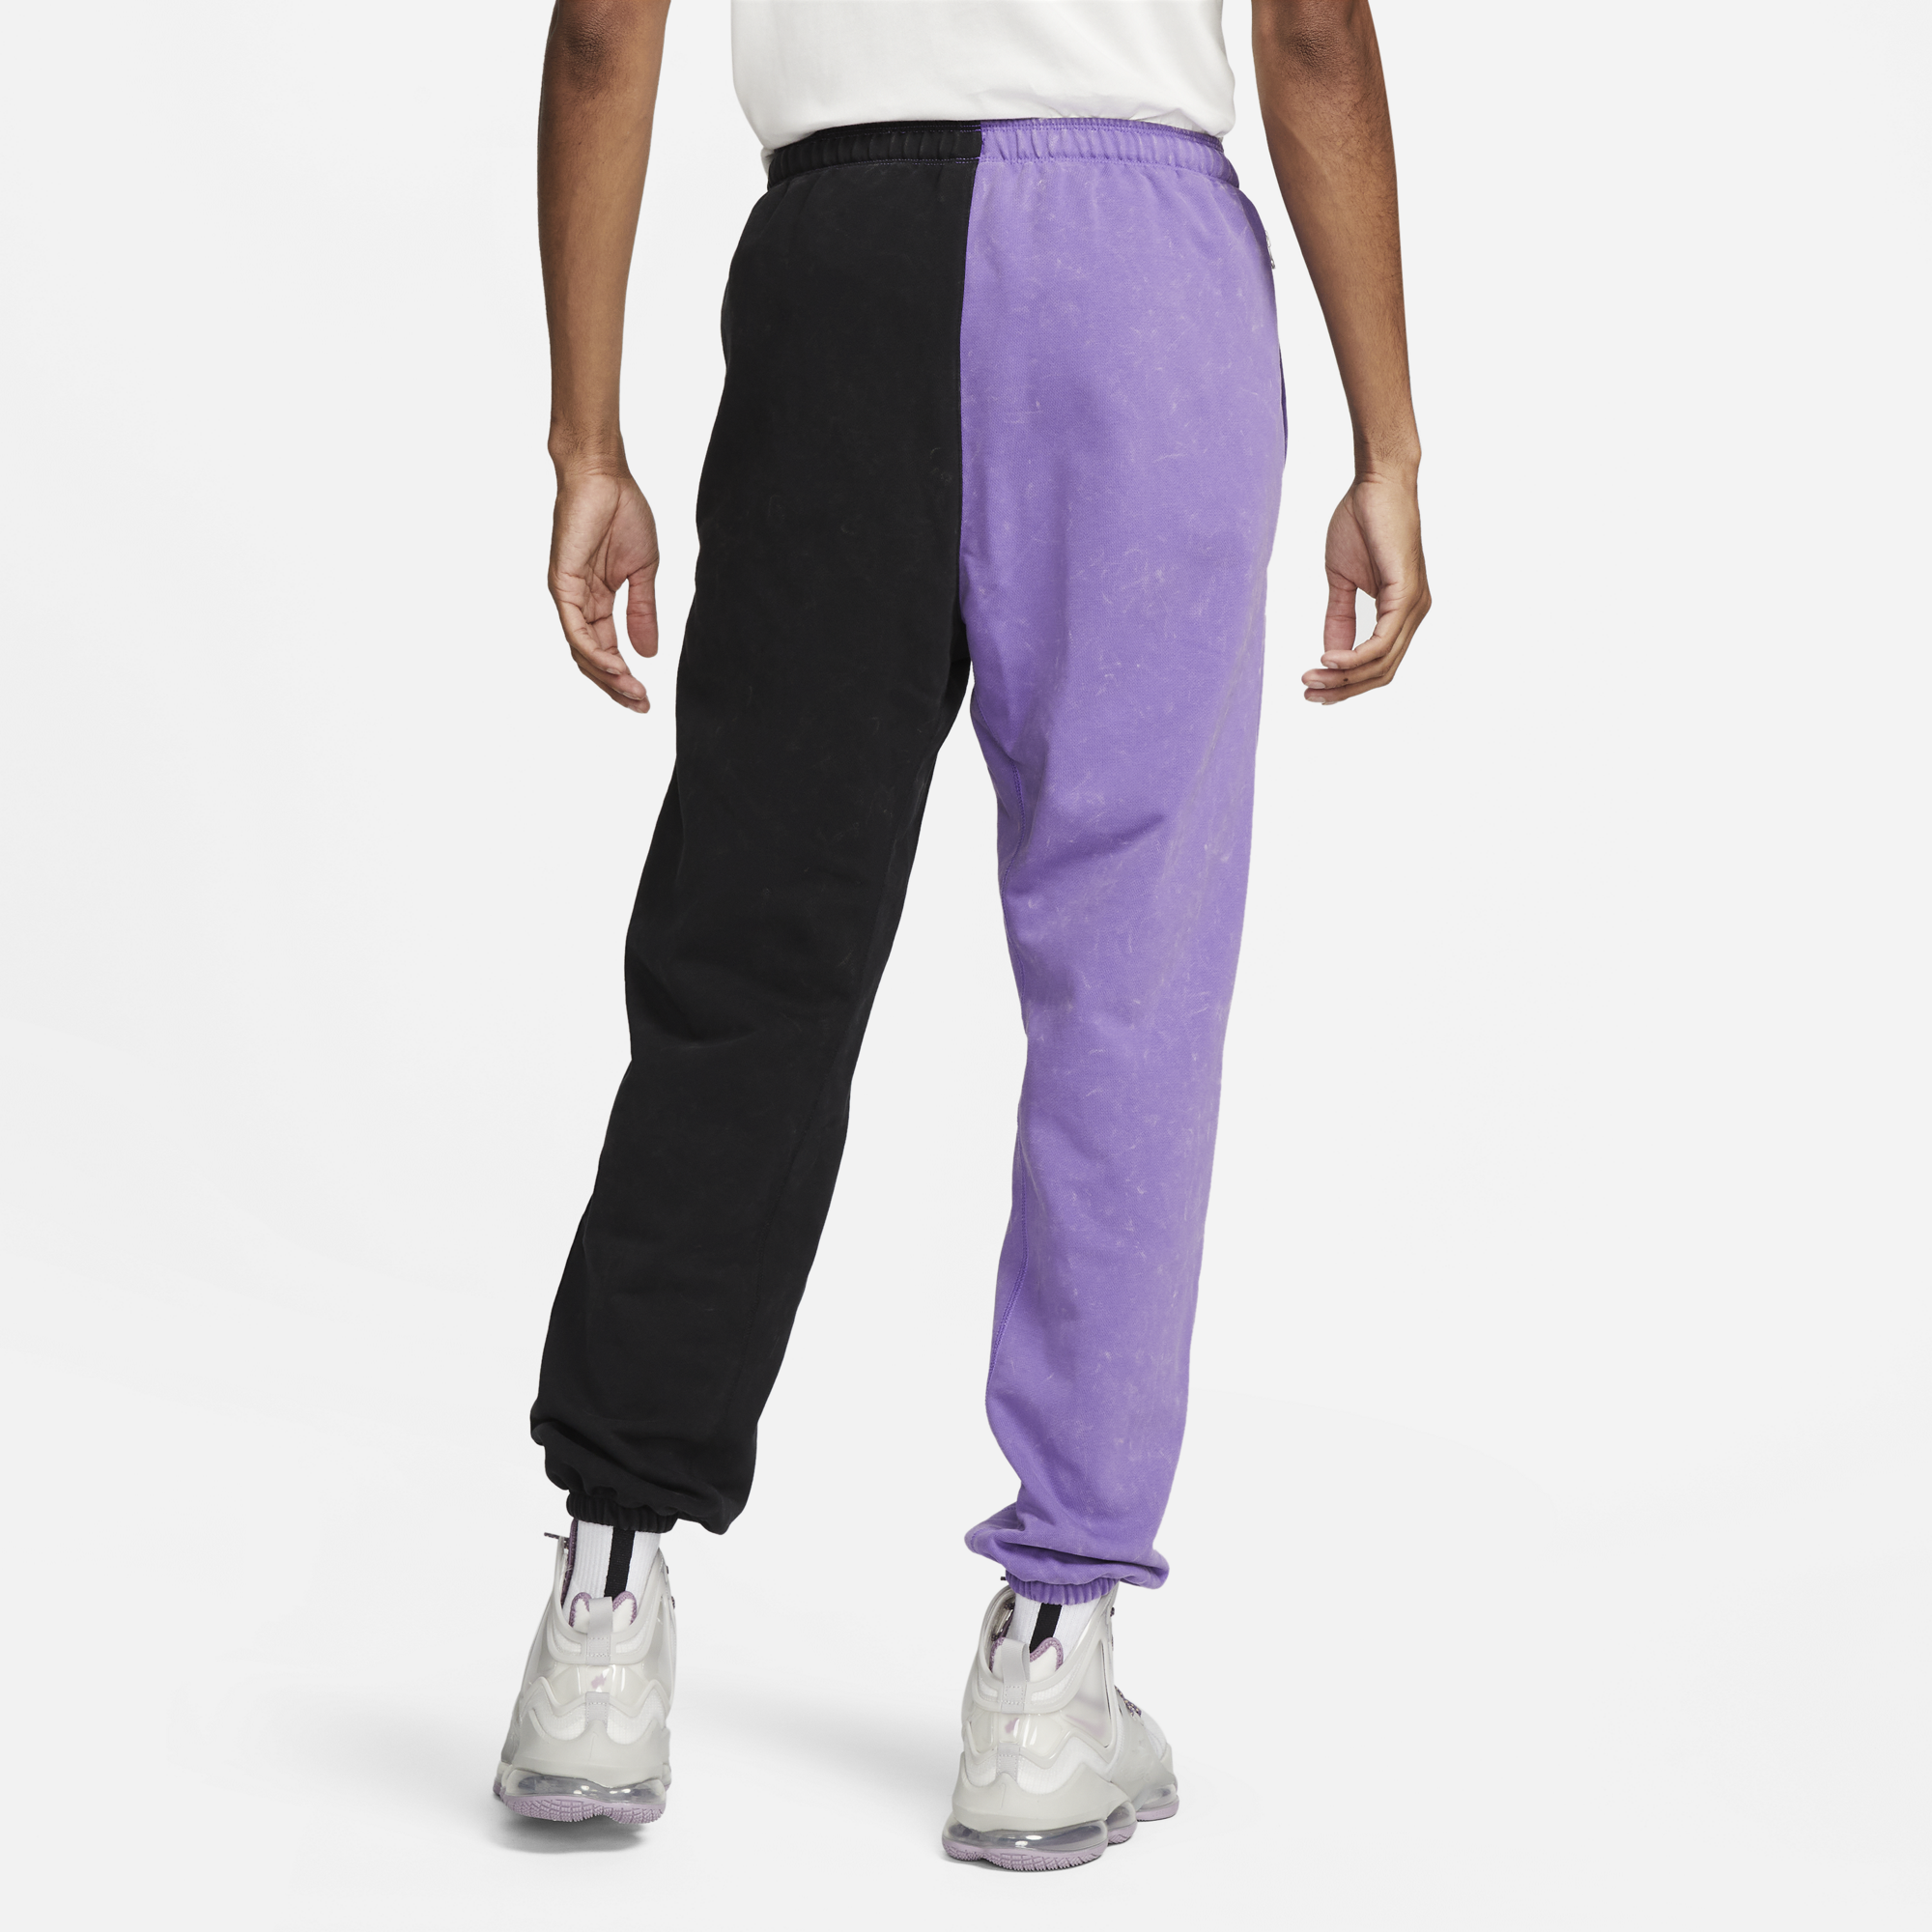 Nike Dri-FIT Standard Issue Premium Basketball Black/Purple Pants Nike